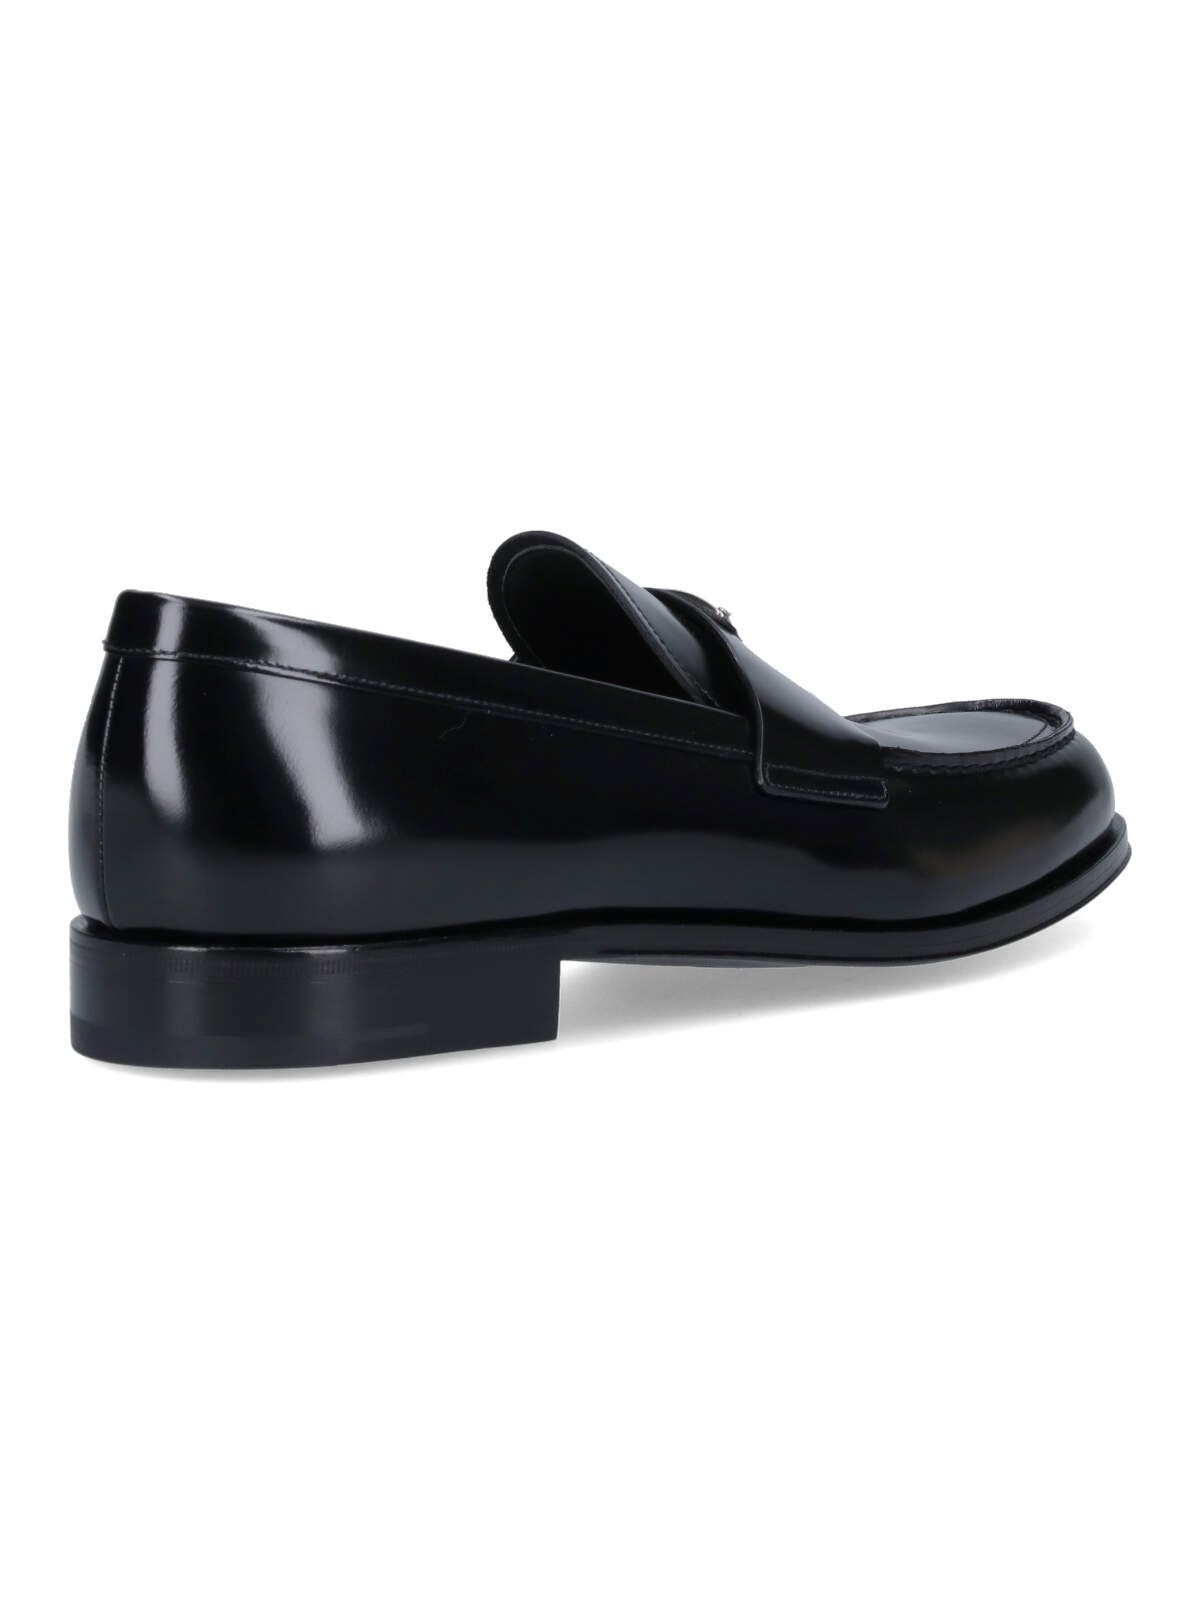 Prada Logo loafers available on SUGAR - 160270